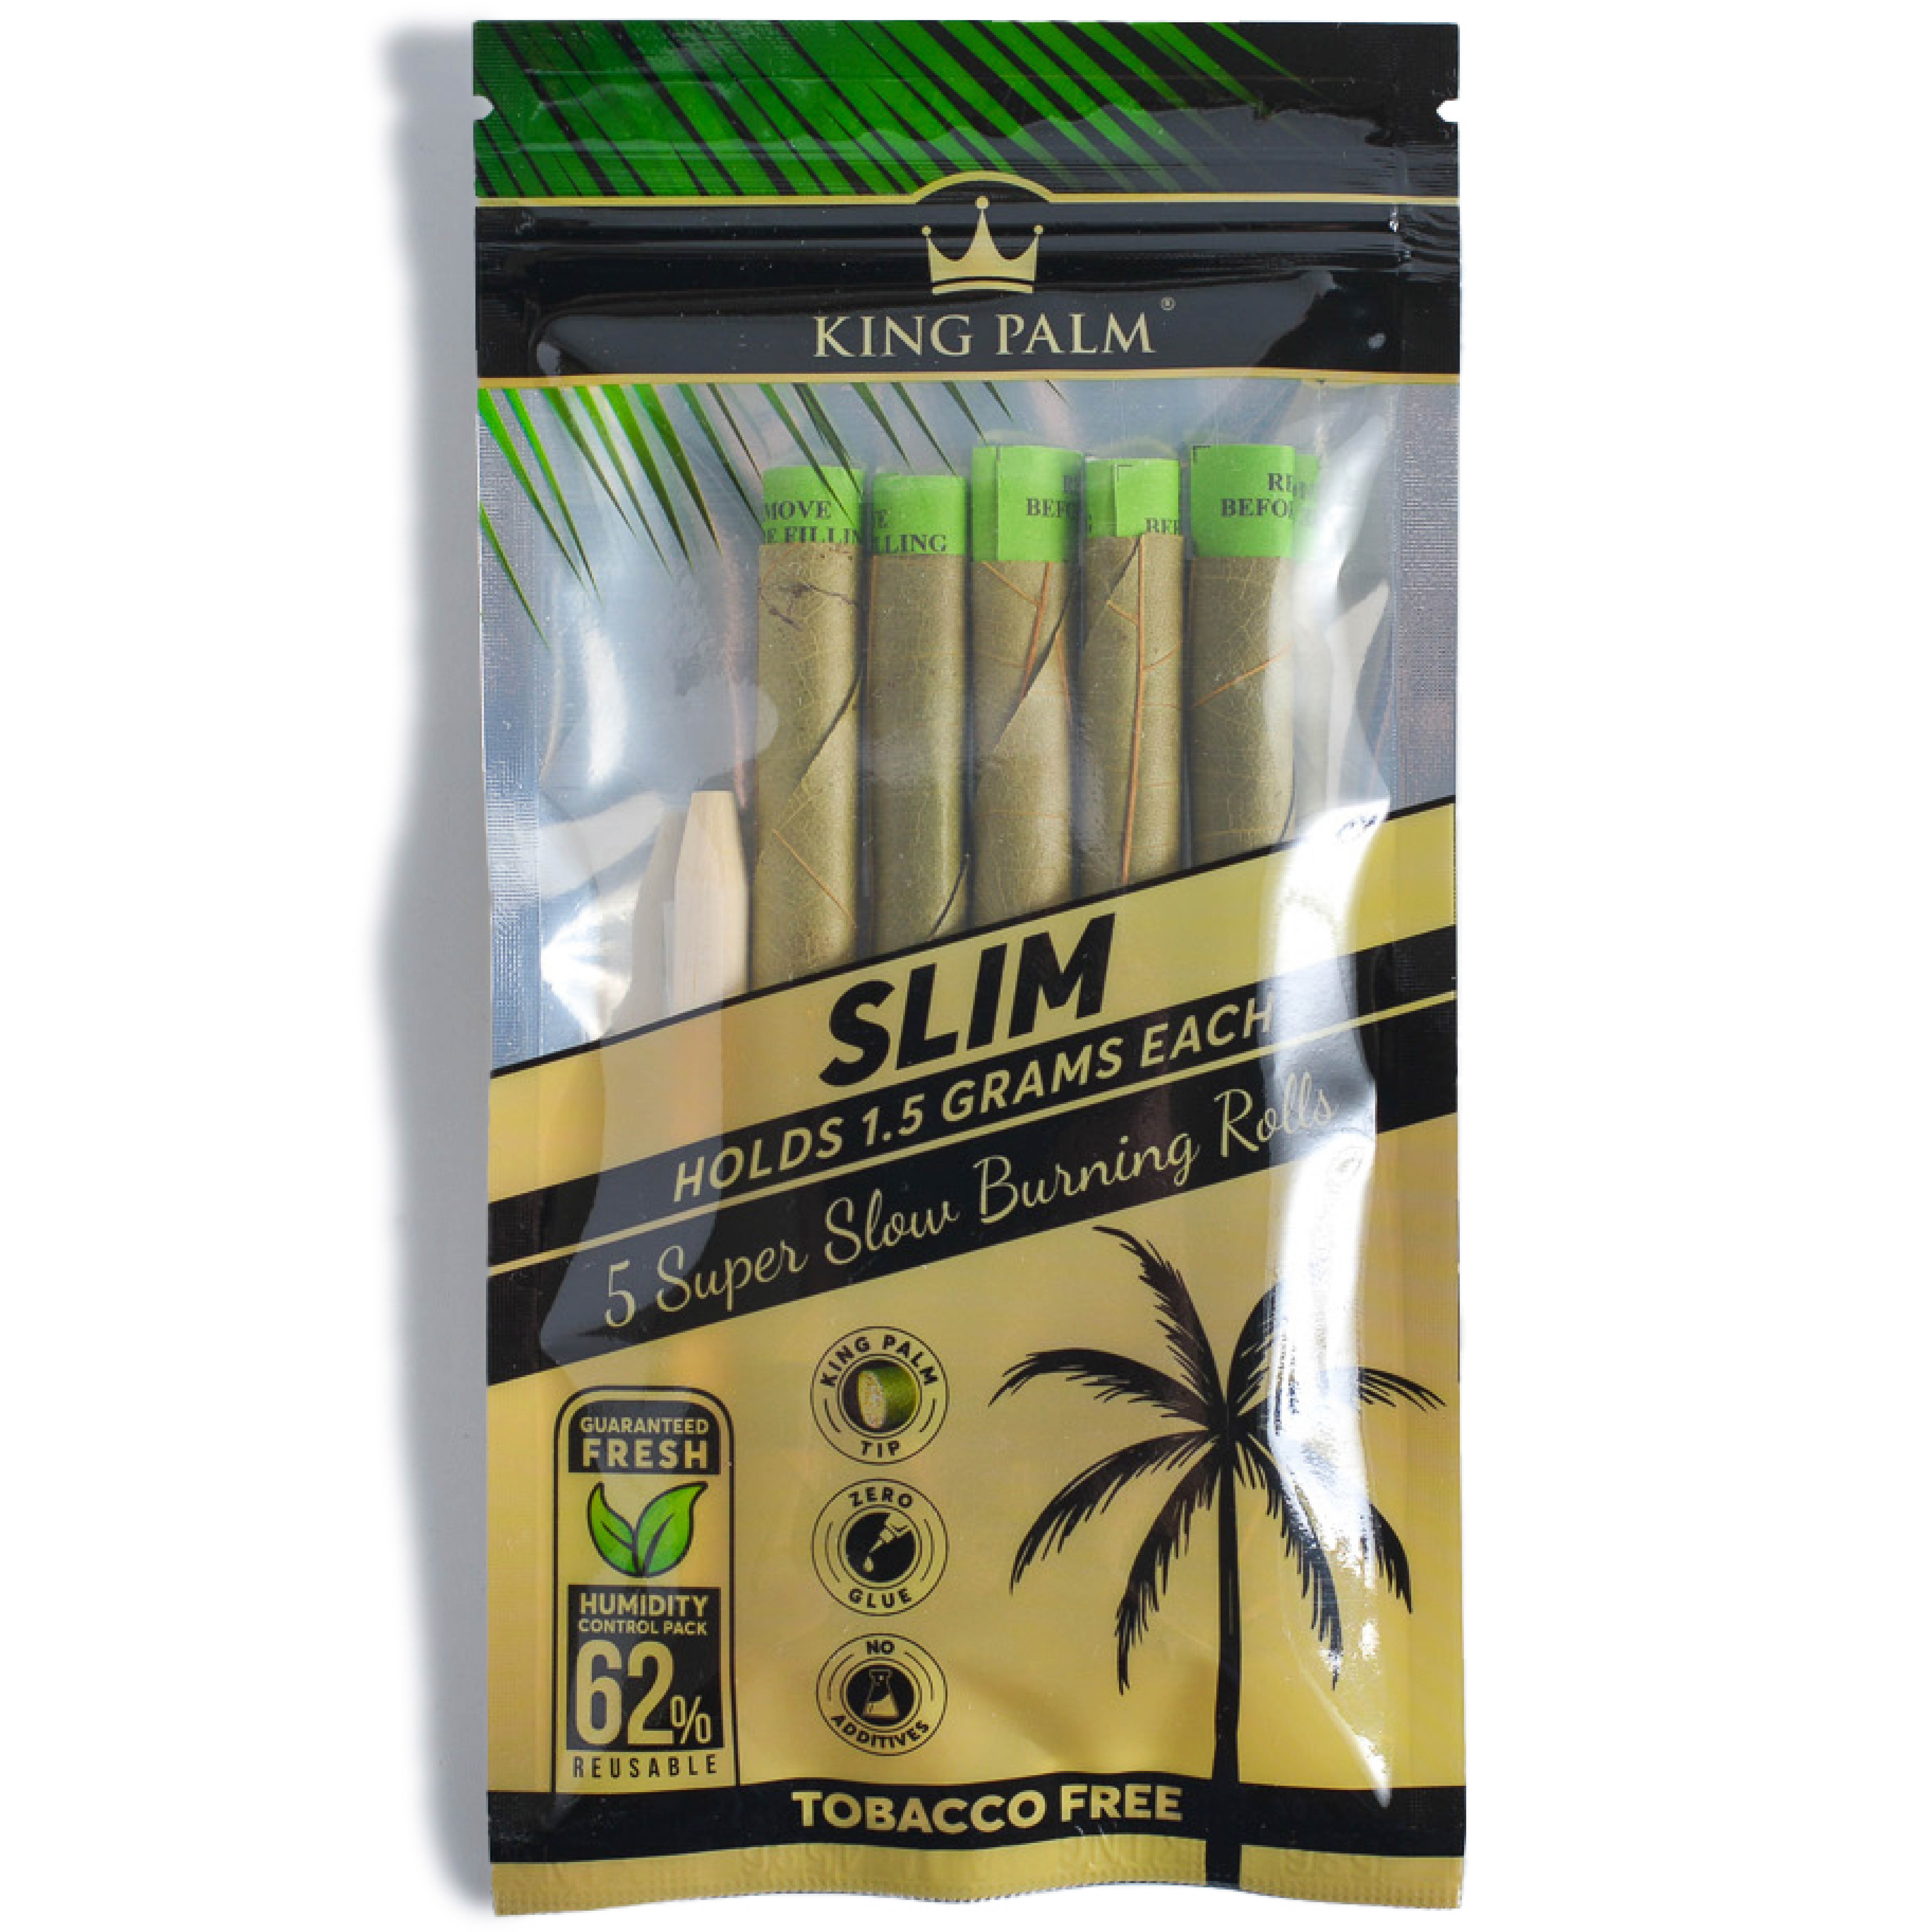 420friendly "King Palm Wrap"  キングパーム Leaf pre rolls 詰めるだけで楽しめる 420shibuyaおすすめ [プレロールラップ/Blunts ブランツ] Slin 5pc 1.5g 25min